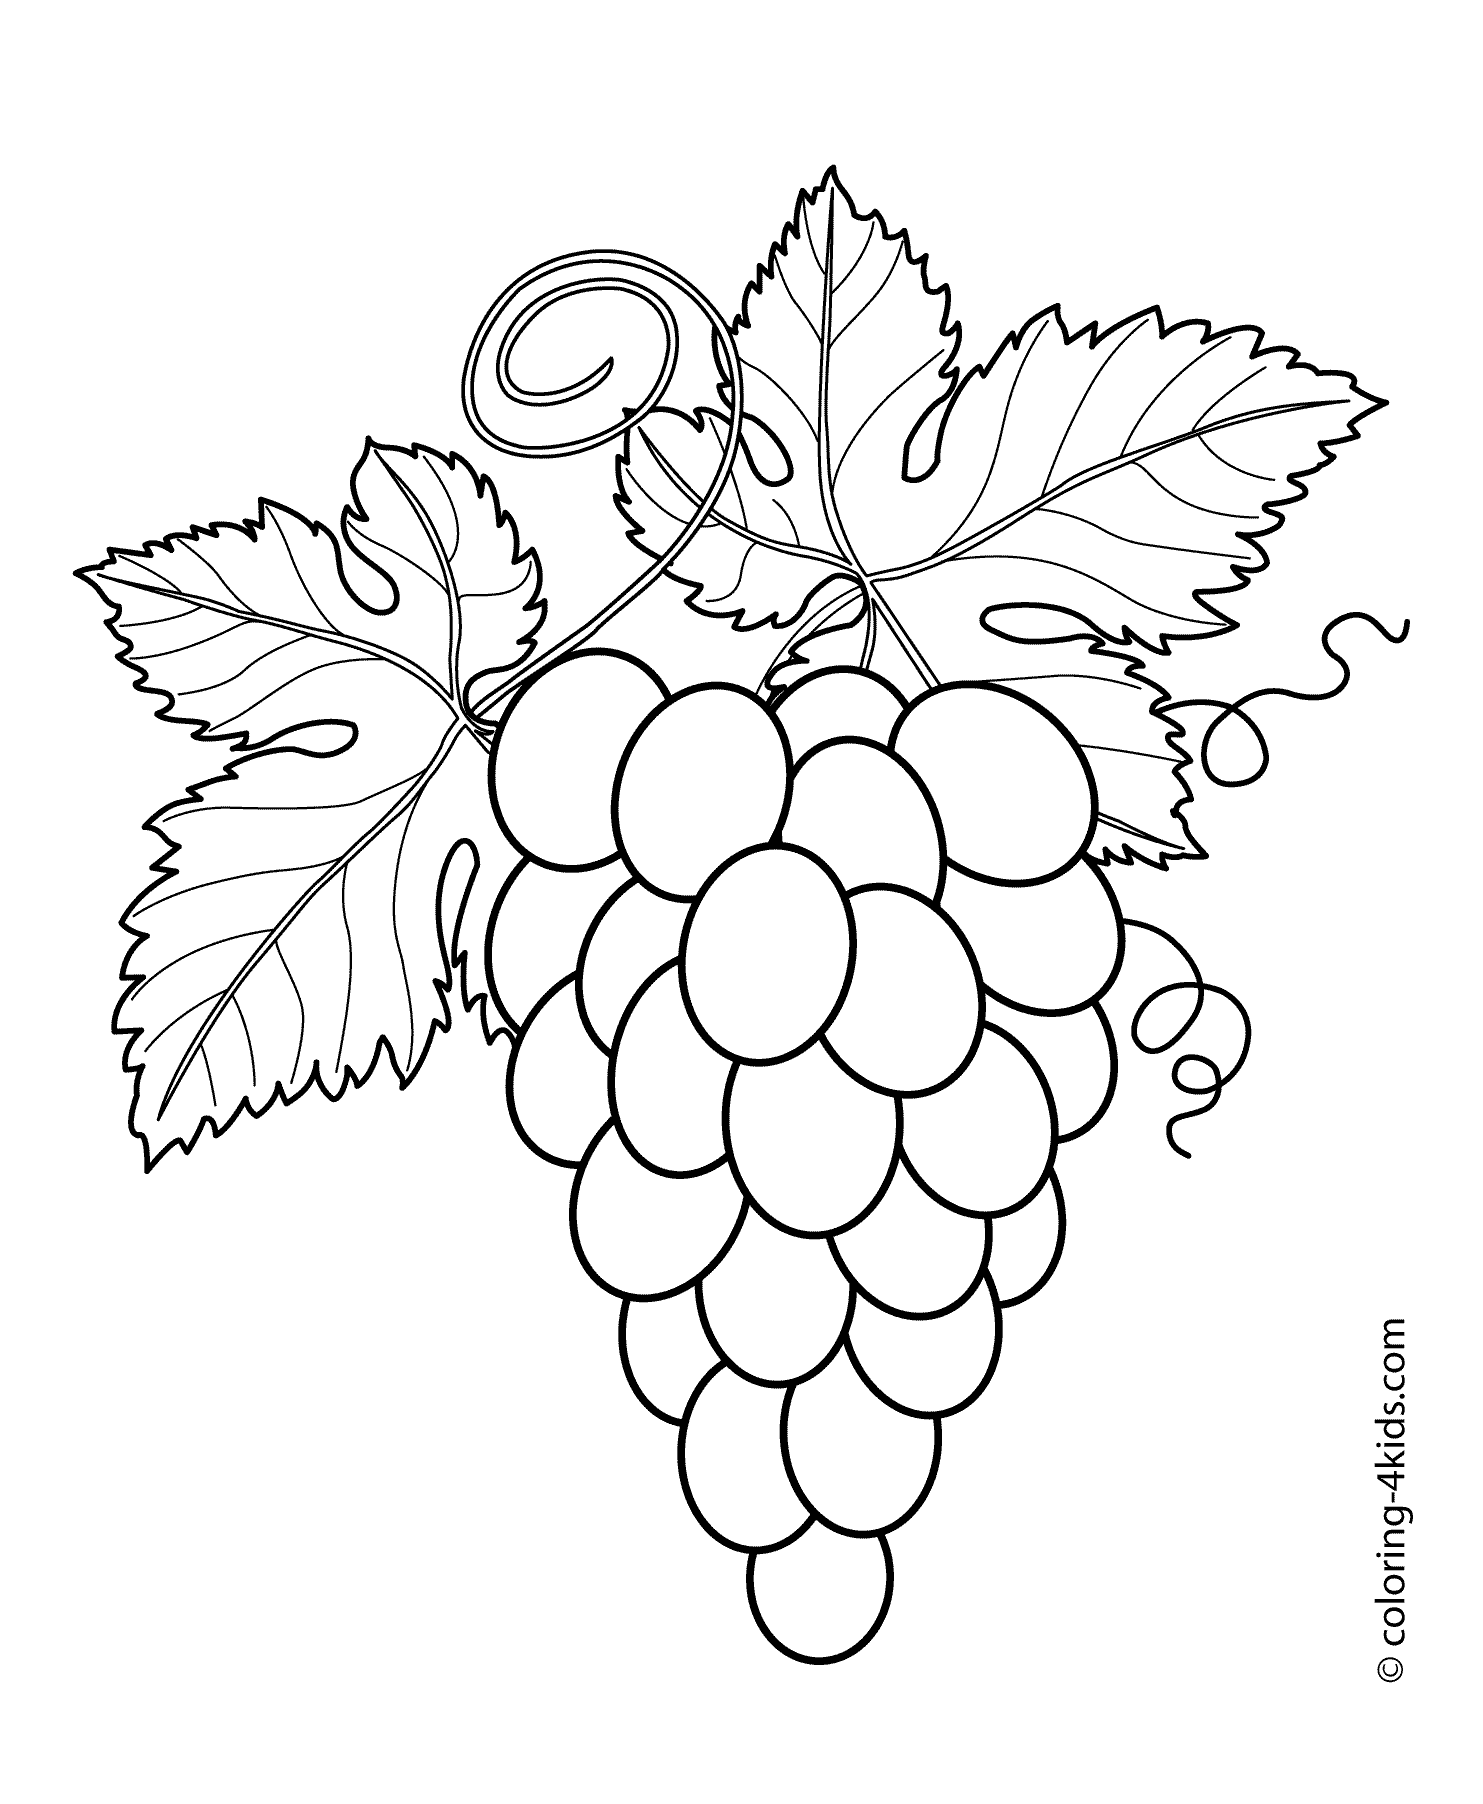 Grape Freehand Pencil Drawn Sketch Hand Stock Illustration 1122797963   Shutterstock